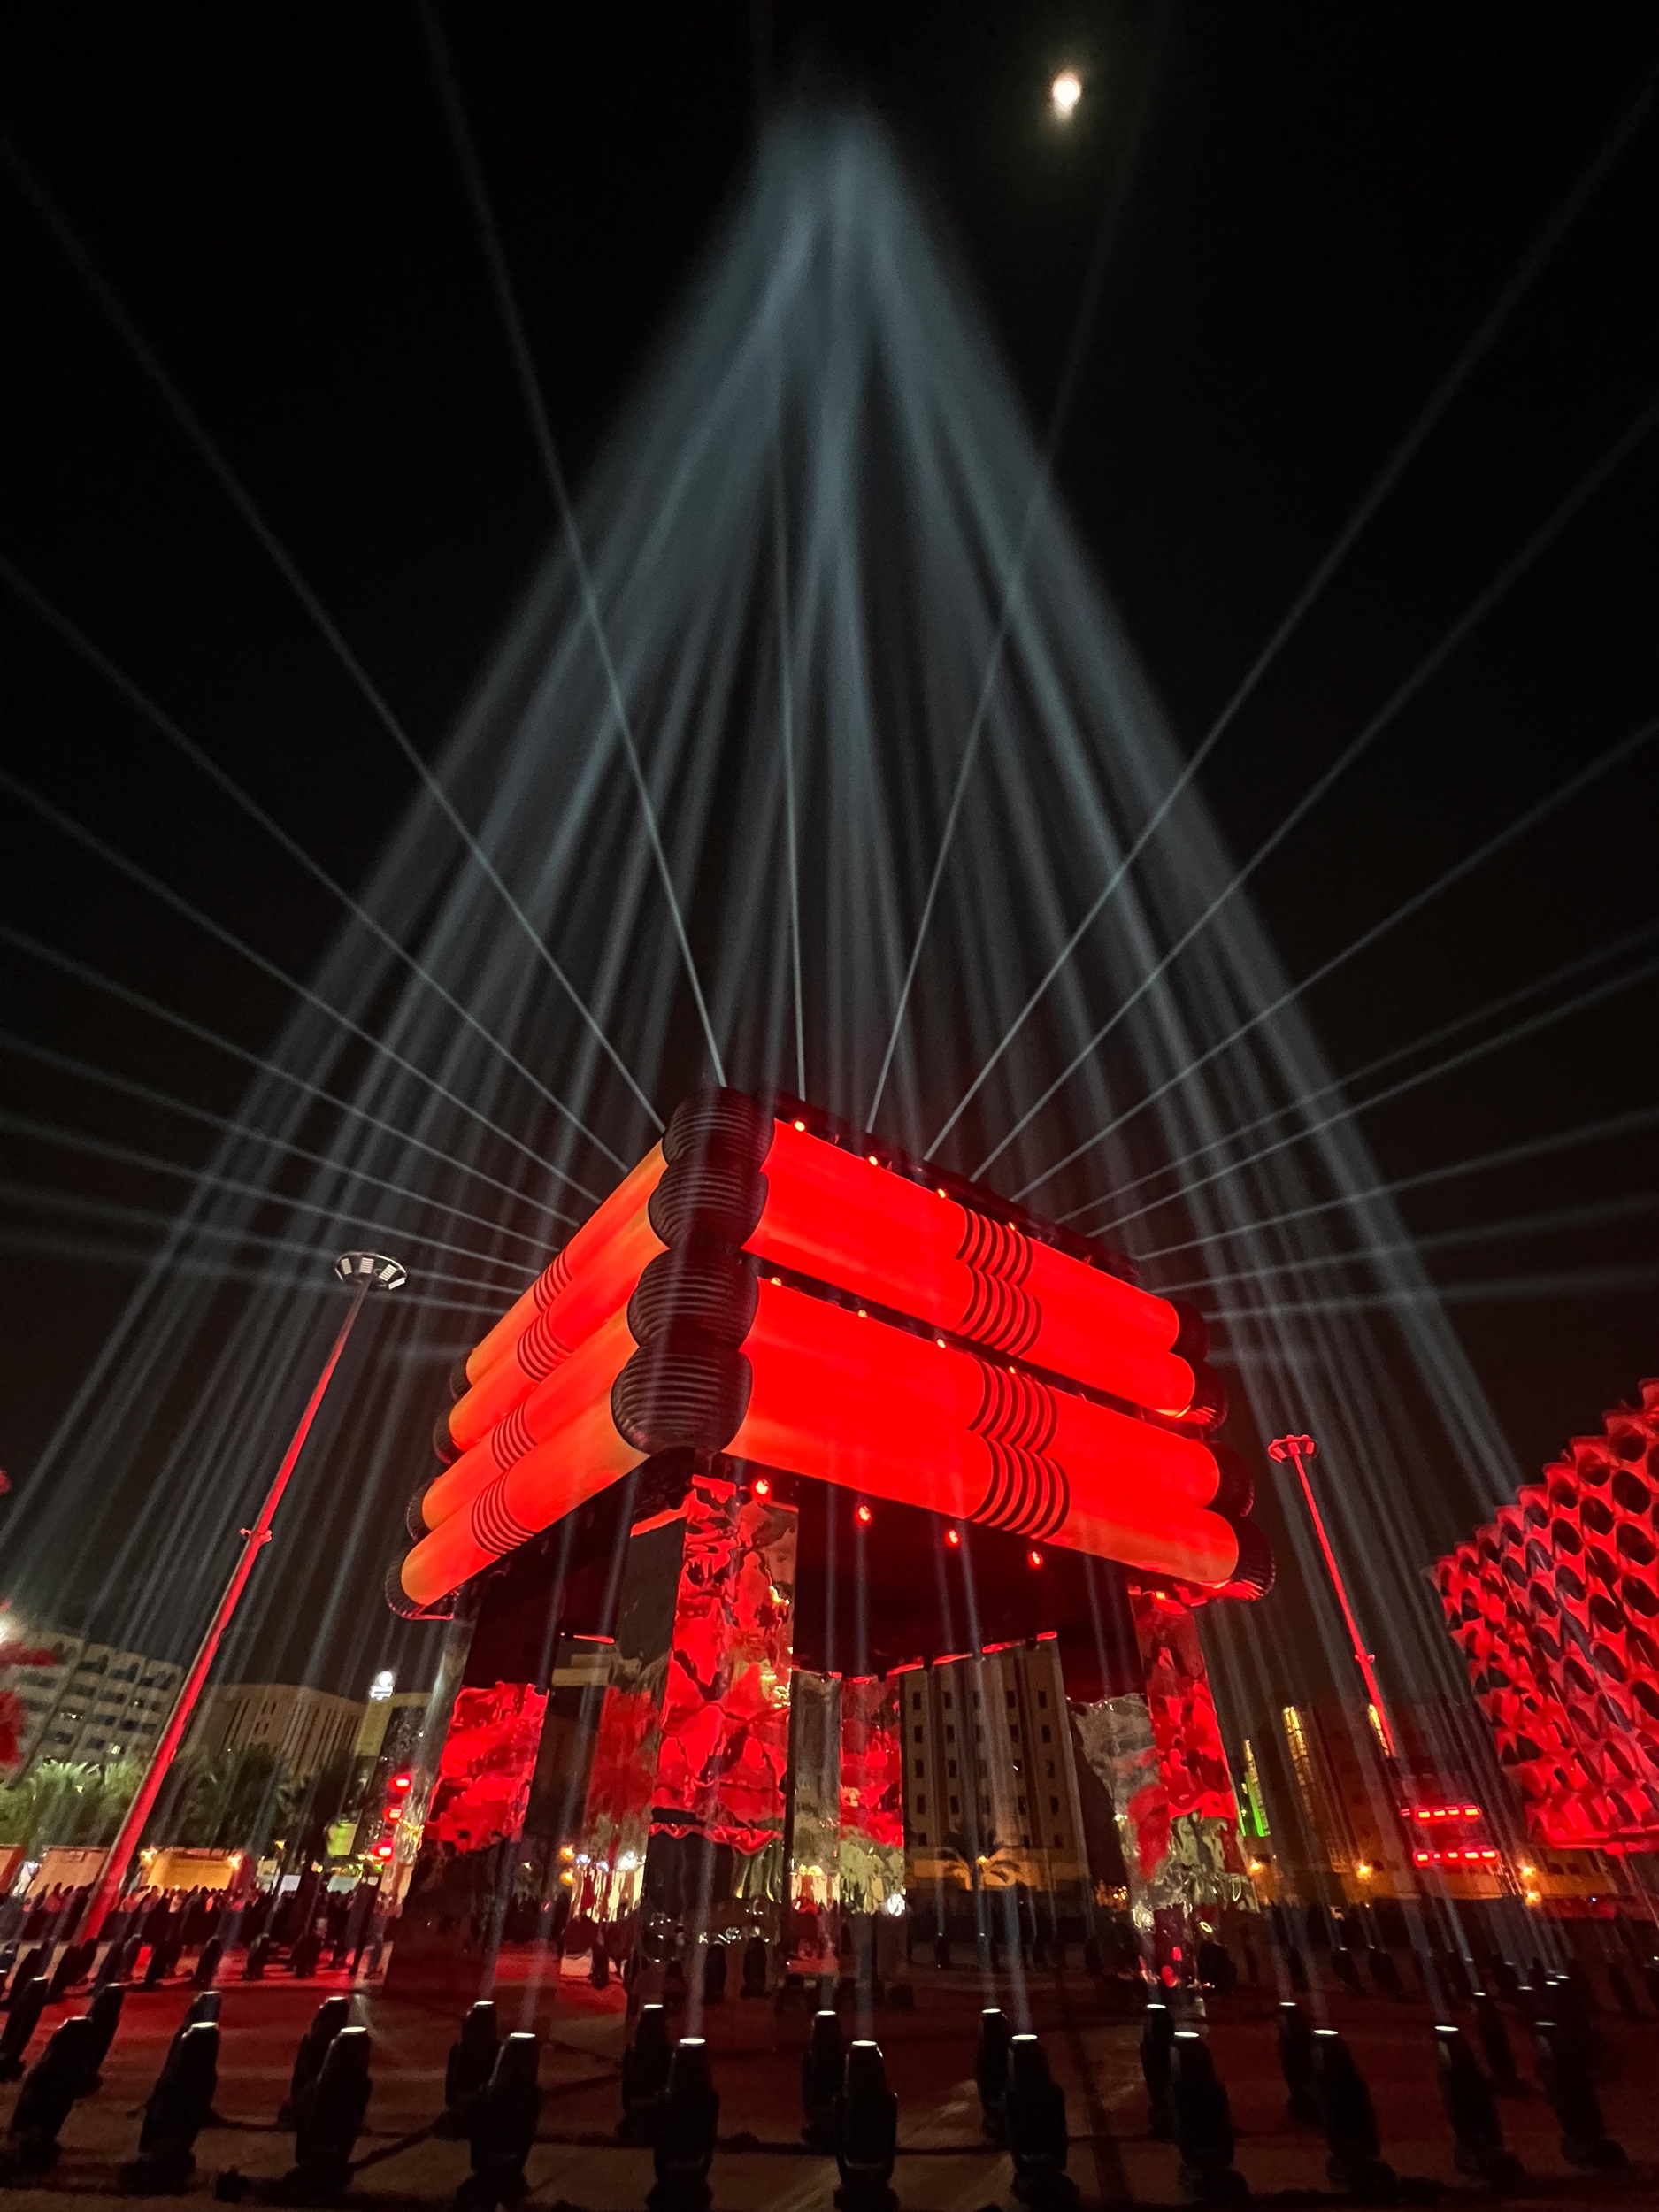 Over 250 Elation Proteus illuminate the Kingdom of Saudi Arabia Founding Day art installation